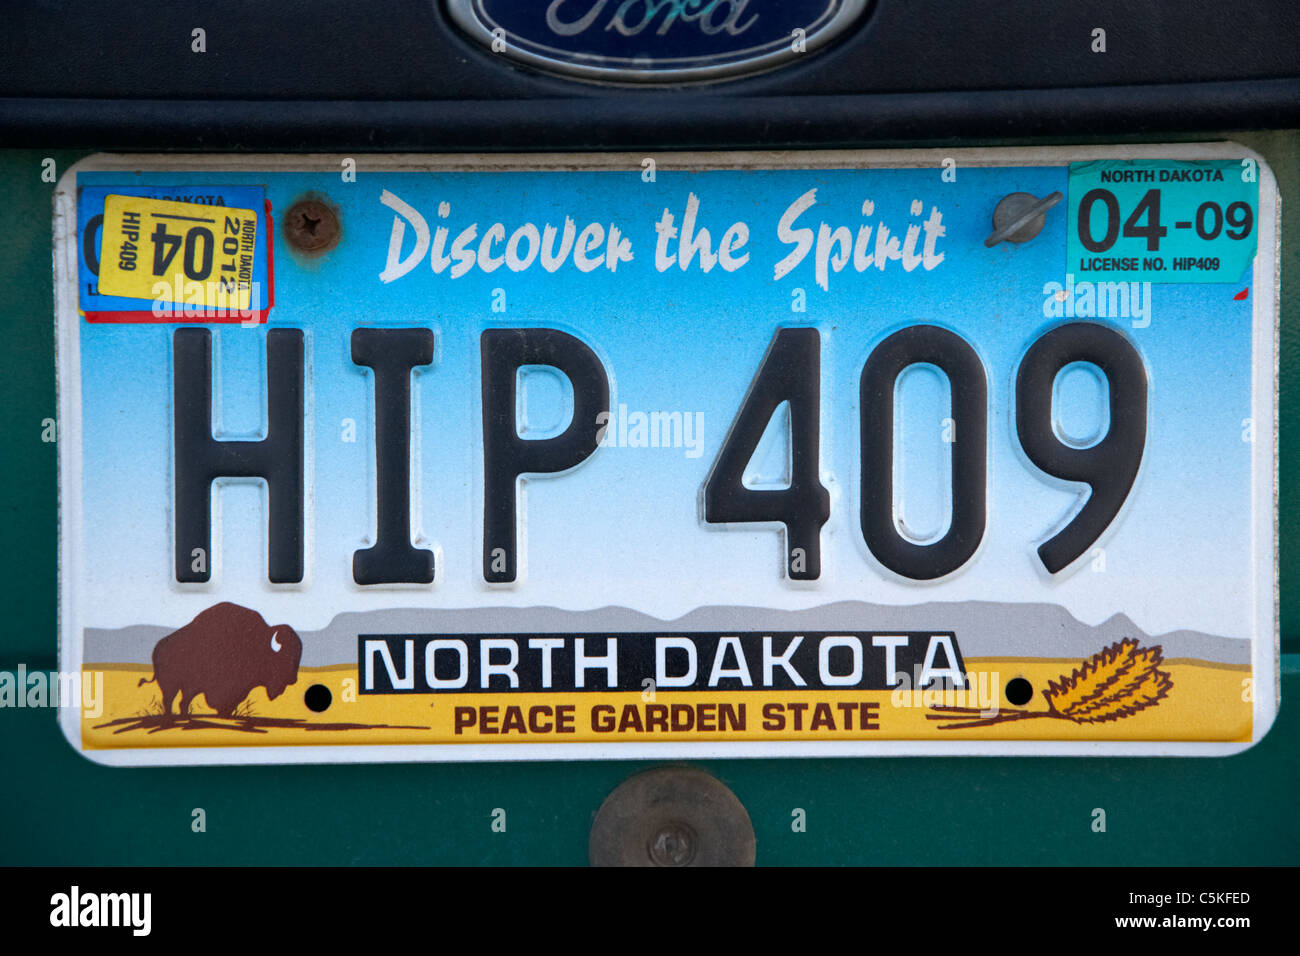 discover the spirit peace garden state north dakota vehicle license plate state usa Stock Photo